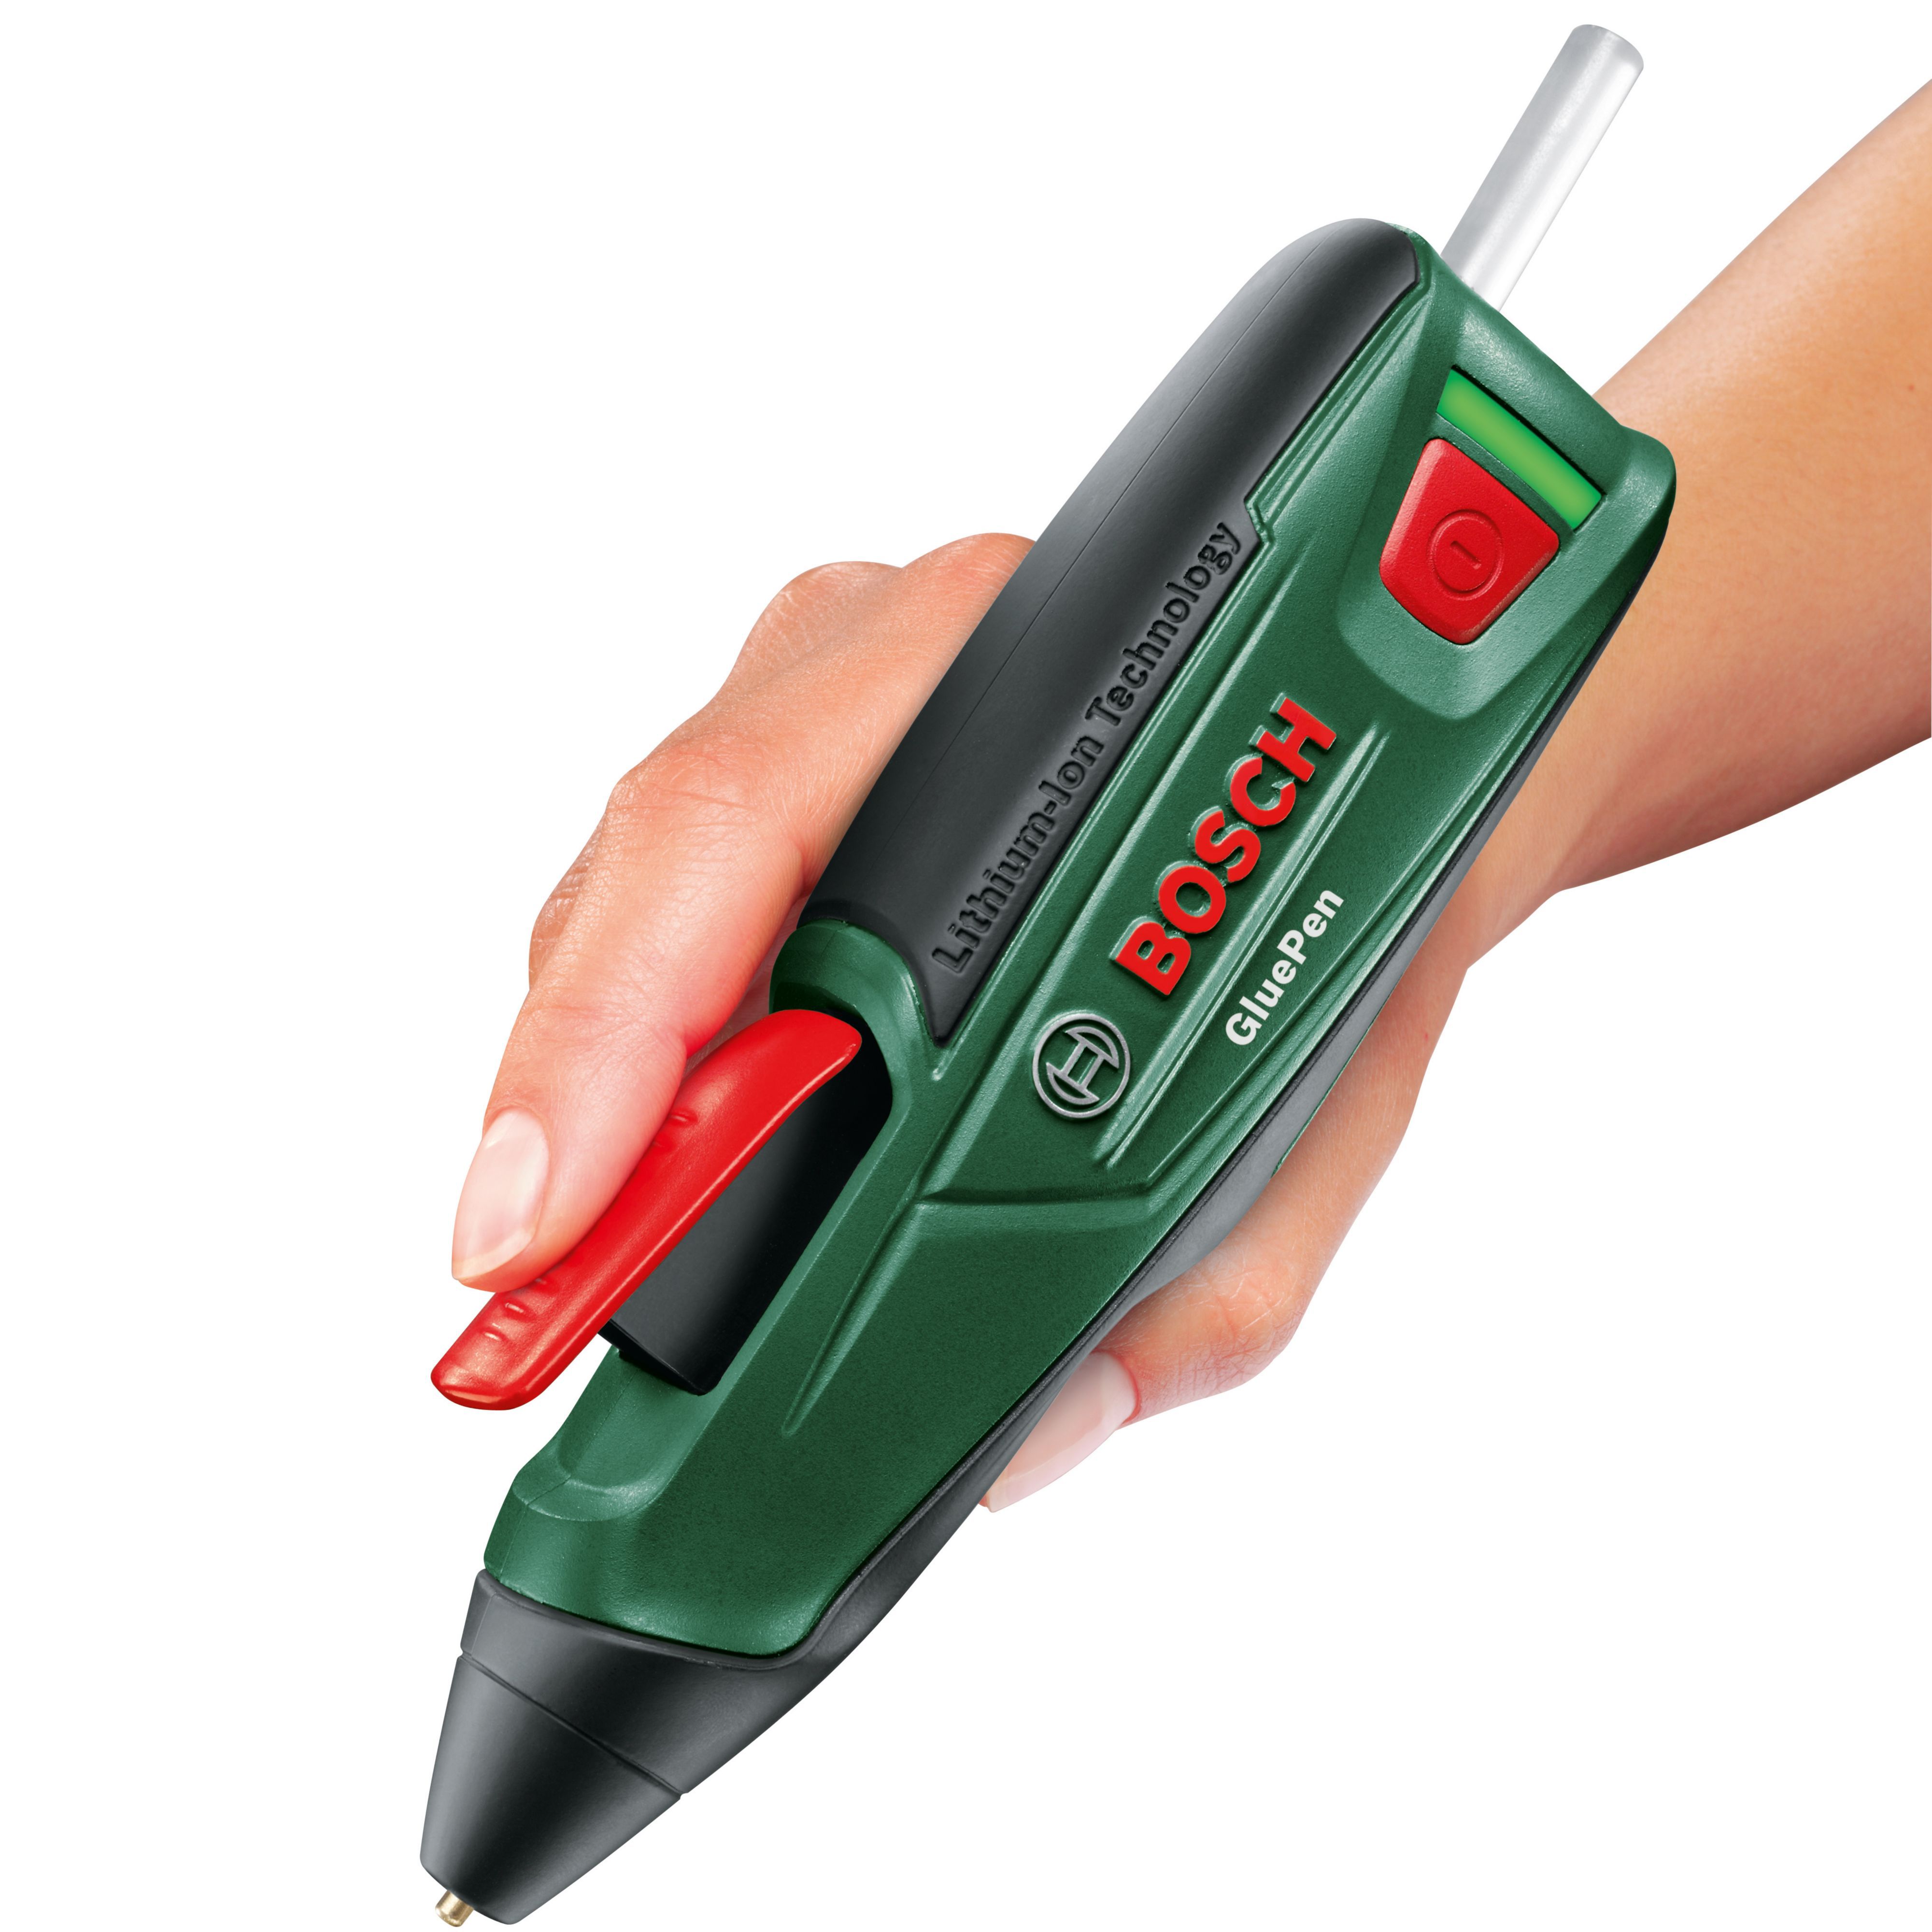 4v Cordless Hot Glue Tool - Wireless Glue Tool Kit With 20 Glue